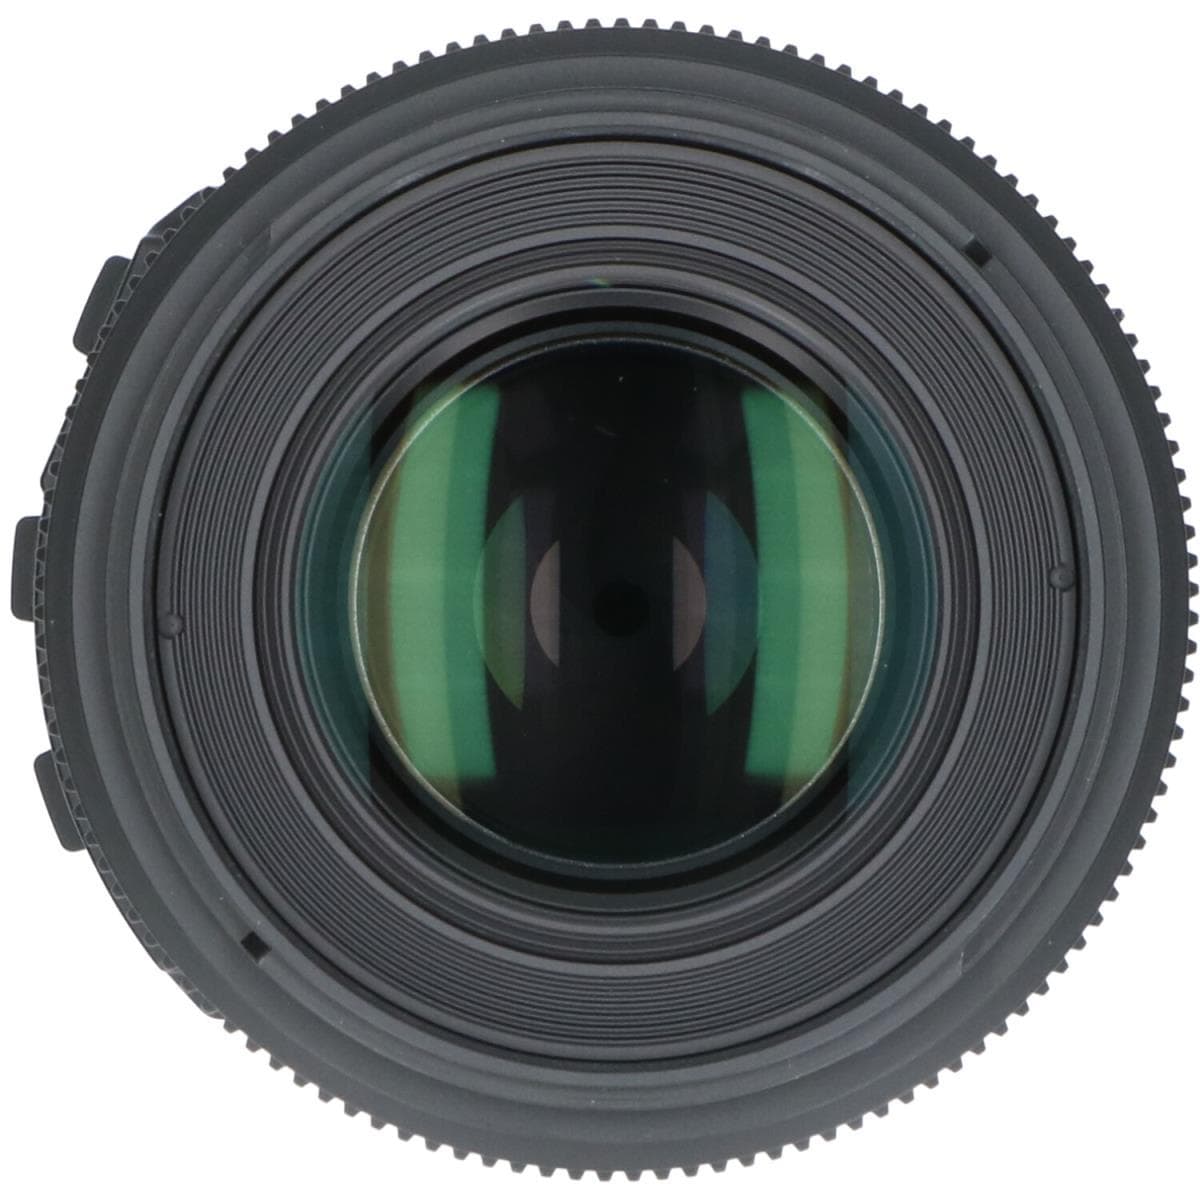 SIGMA Nikon 105mm F2.8EX DG OS HSM